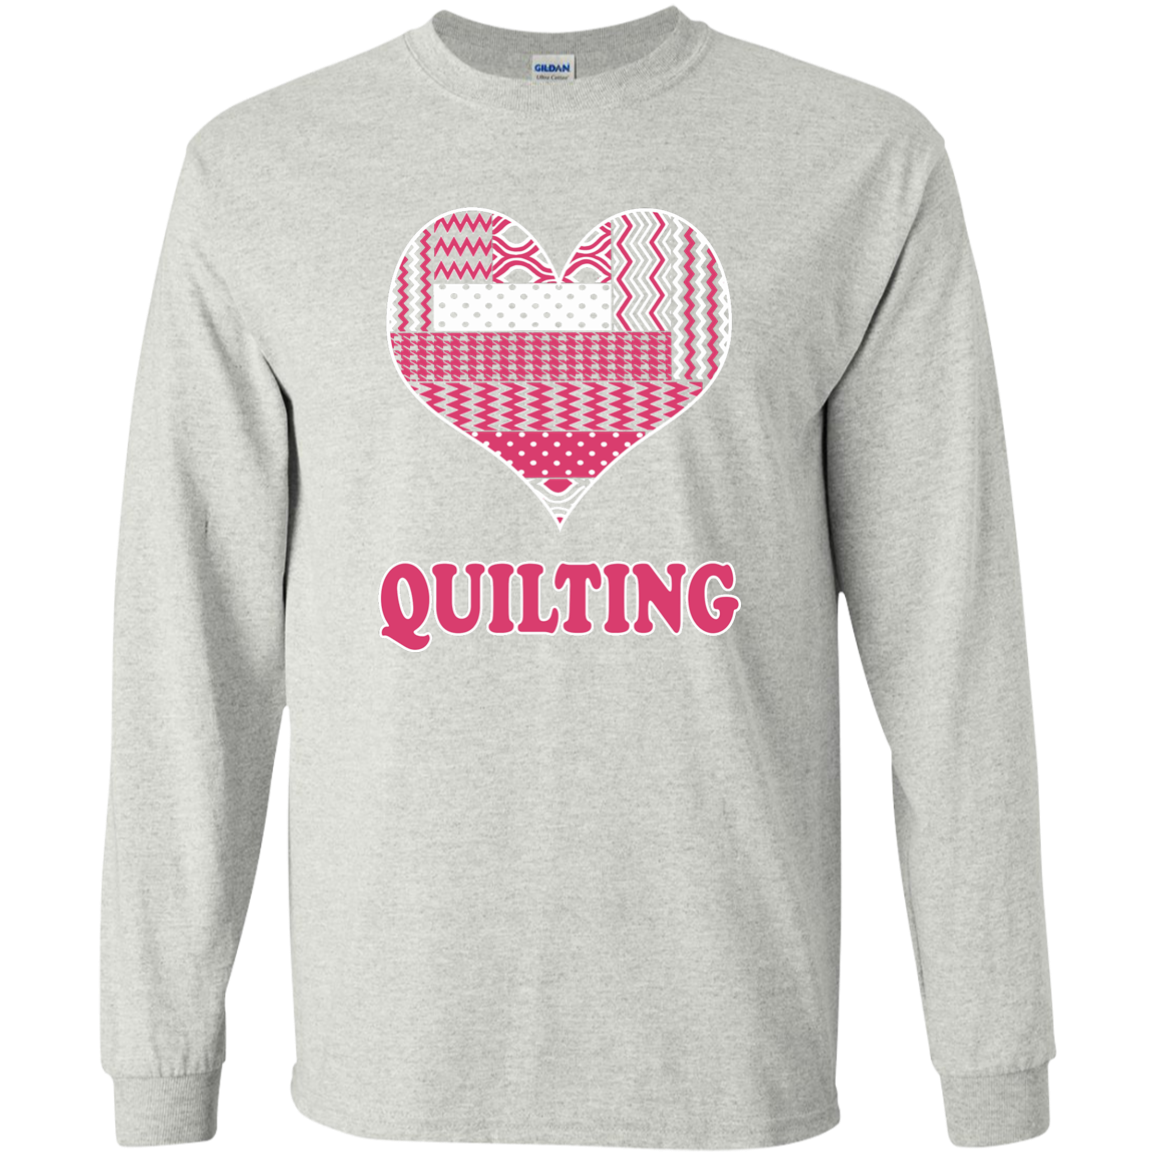 Heart Quilting Long Sleeve Ultra Cotton T-Shirt - Crafter4Life - 3